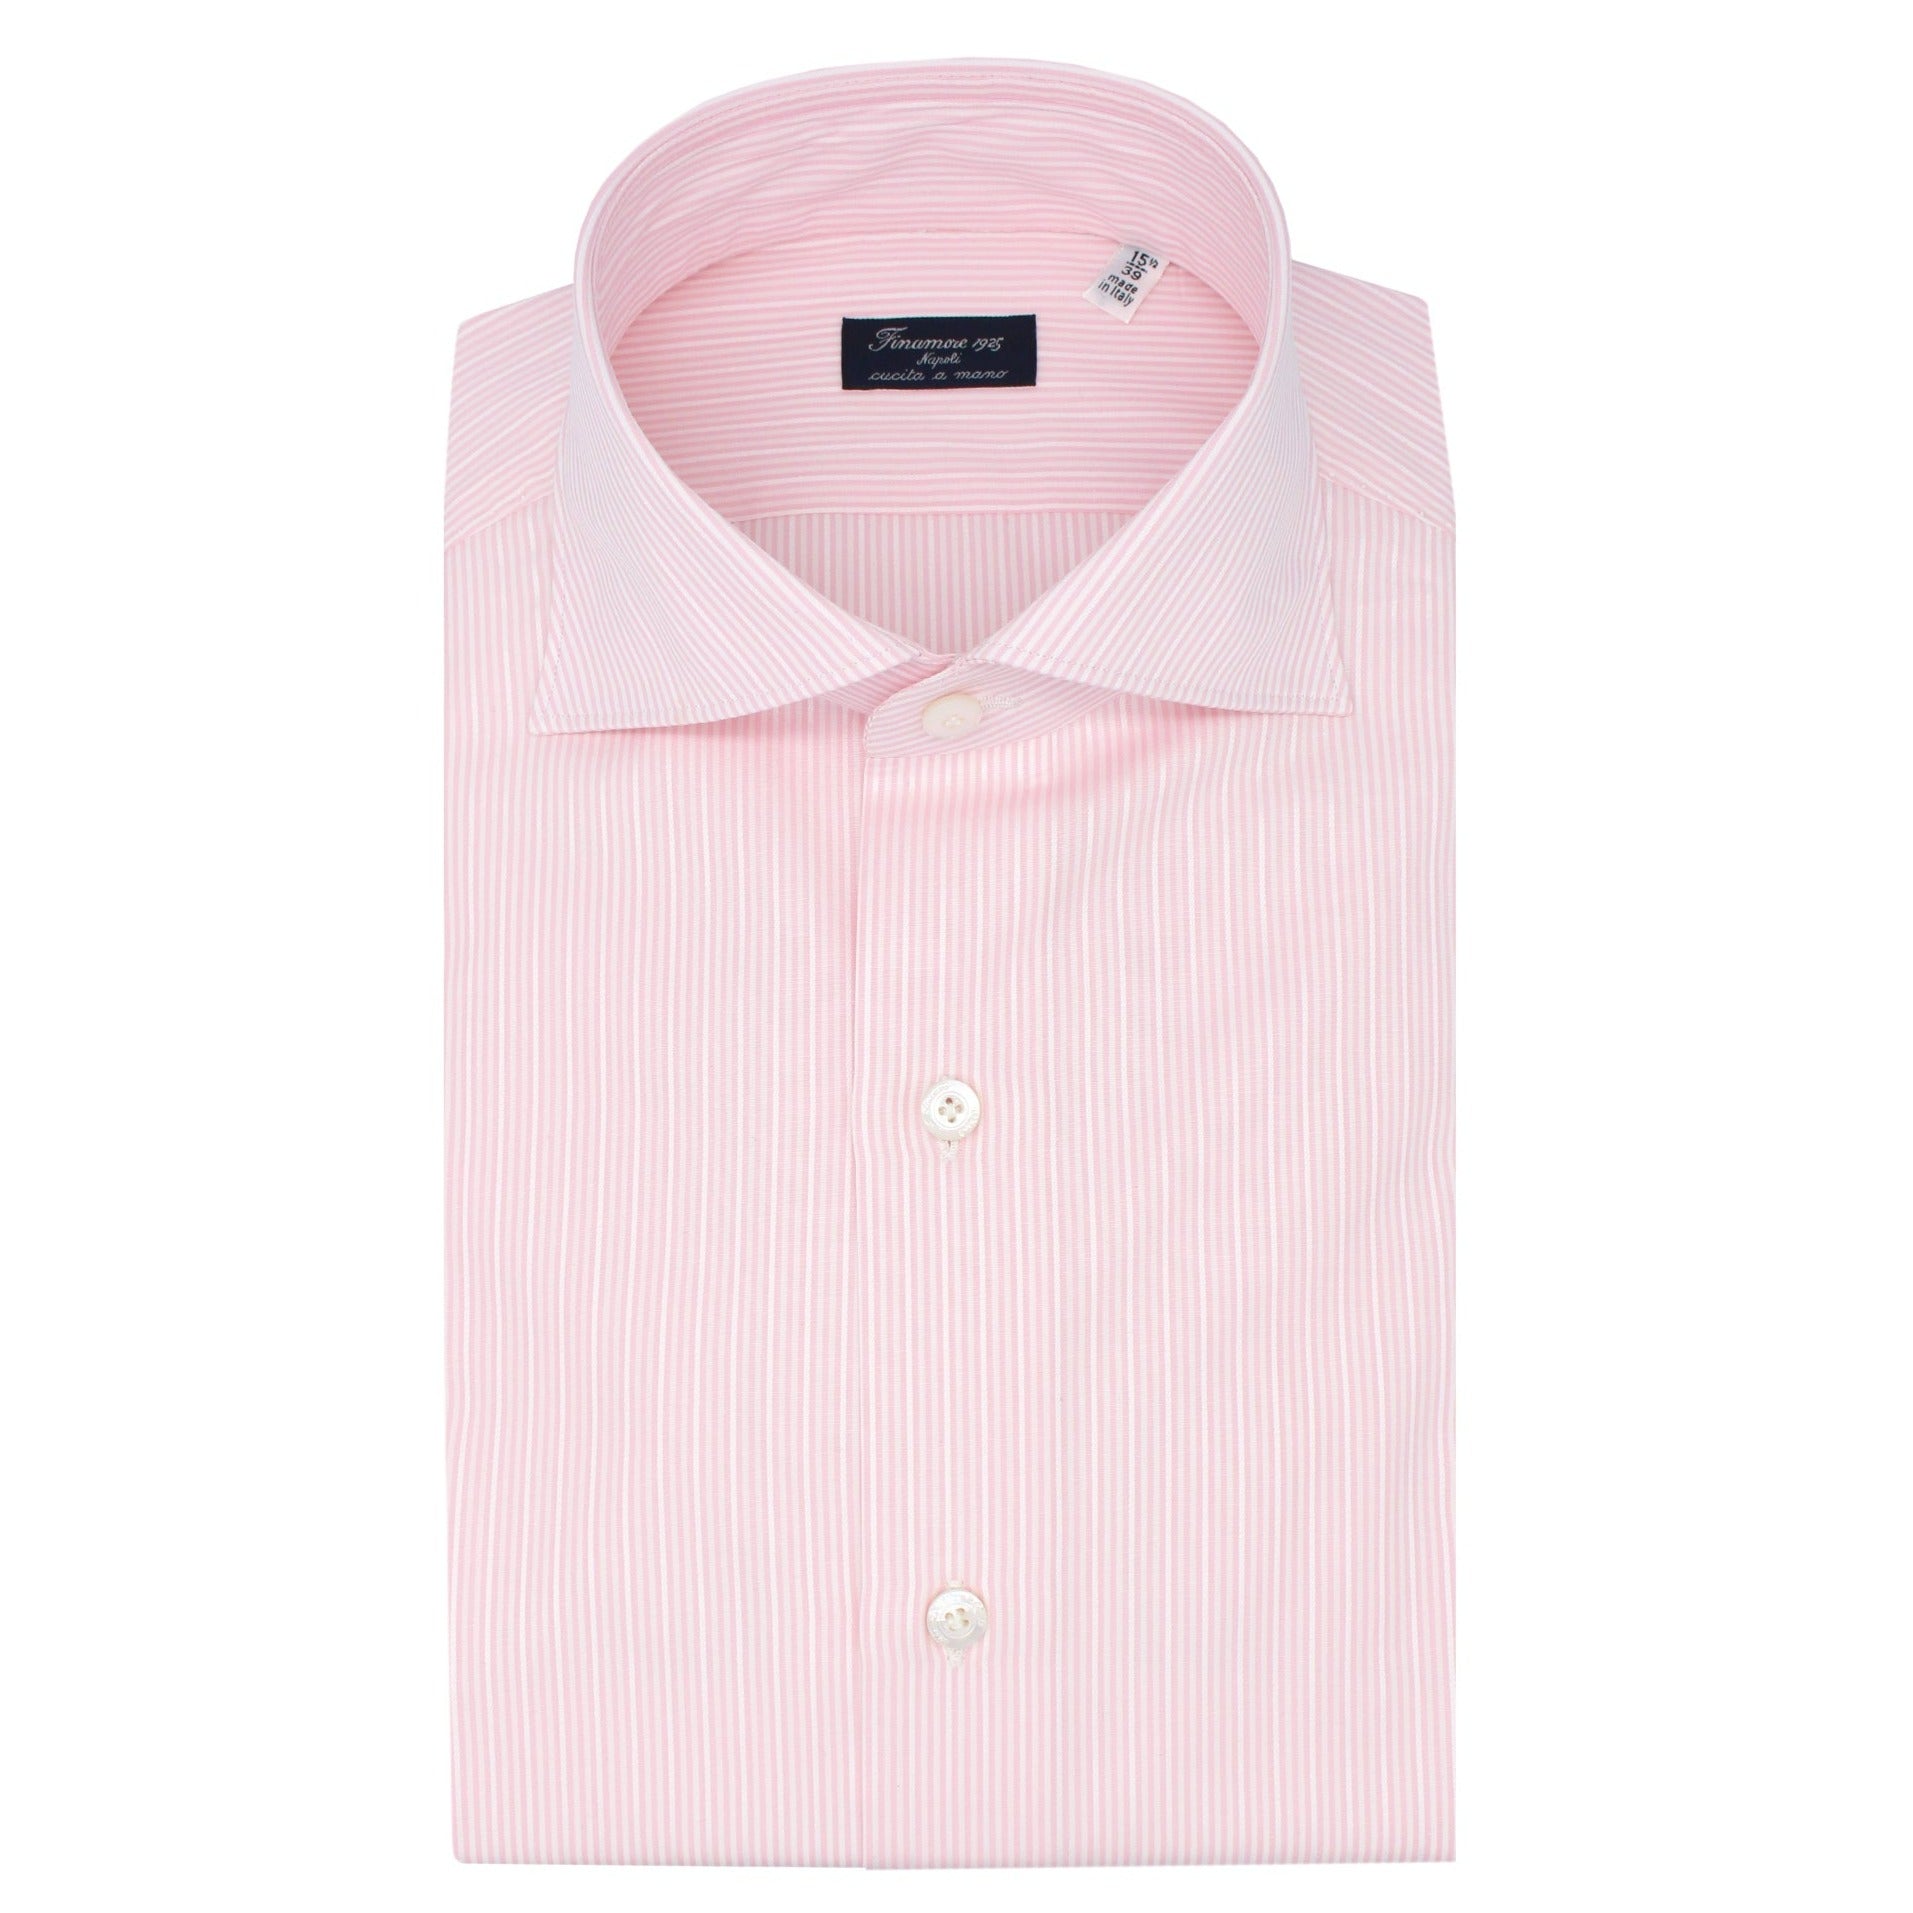 Milano slim fit light pink striped cotton shirt